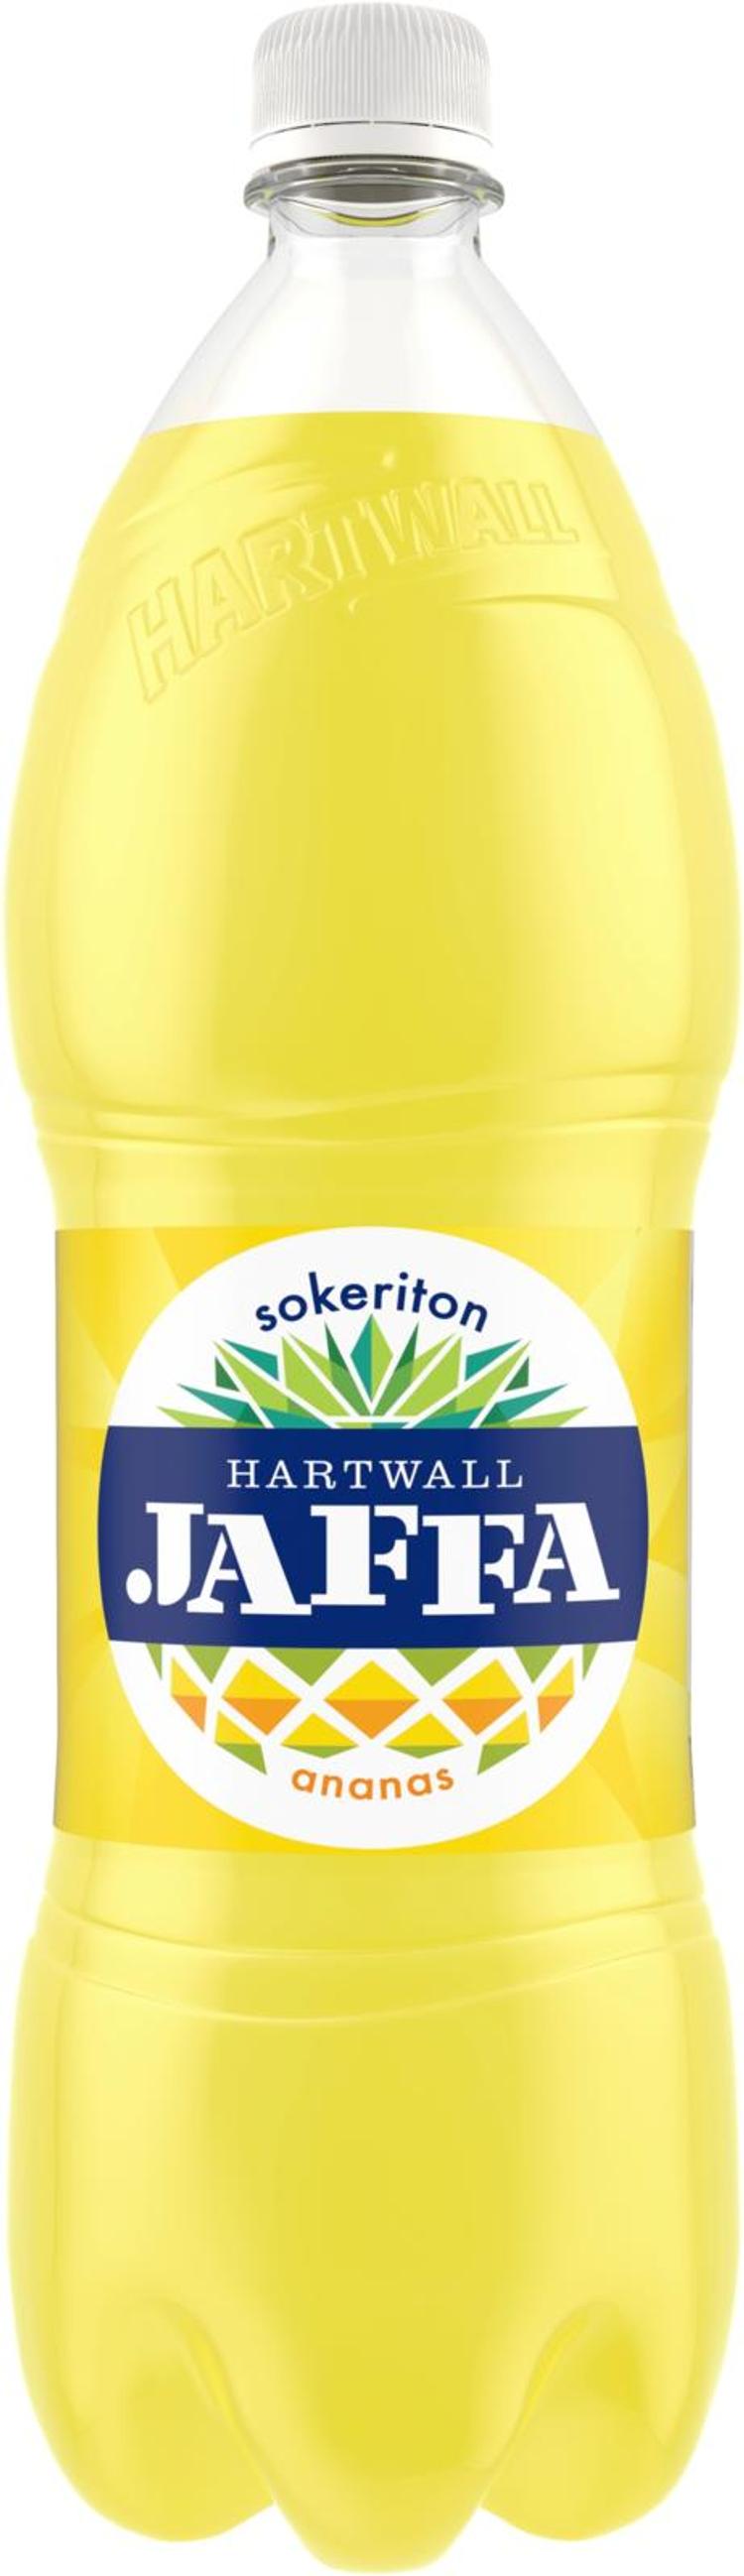 Hartwall Jaffa Ananas Sokeriton virvoitusjuoma 1,5 l